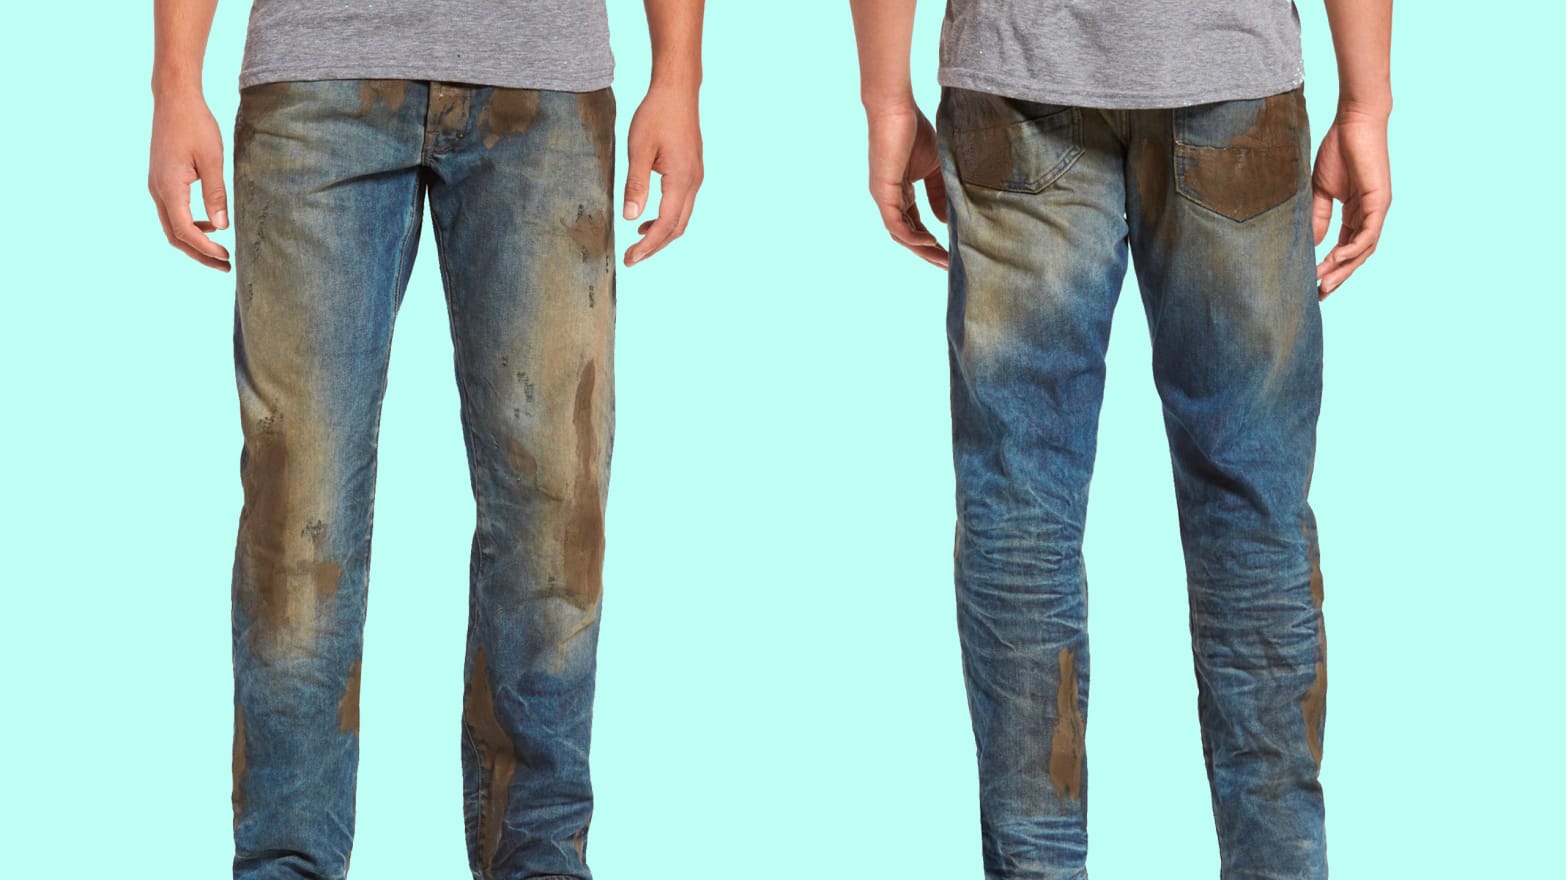 $425 Fake Muddy Jeans at Nordstrom 2018 - PRPS Barracuda Mud Denim